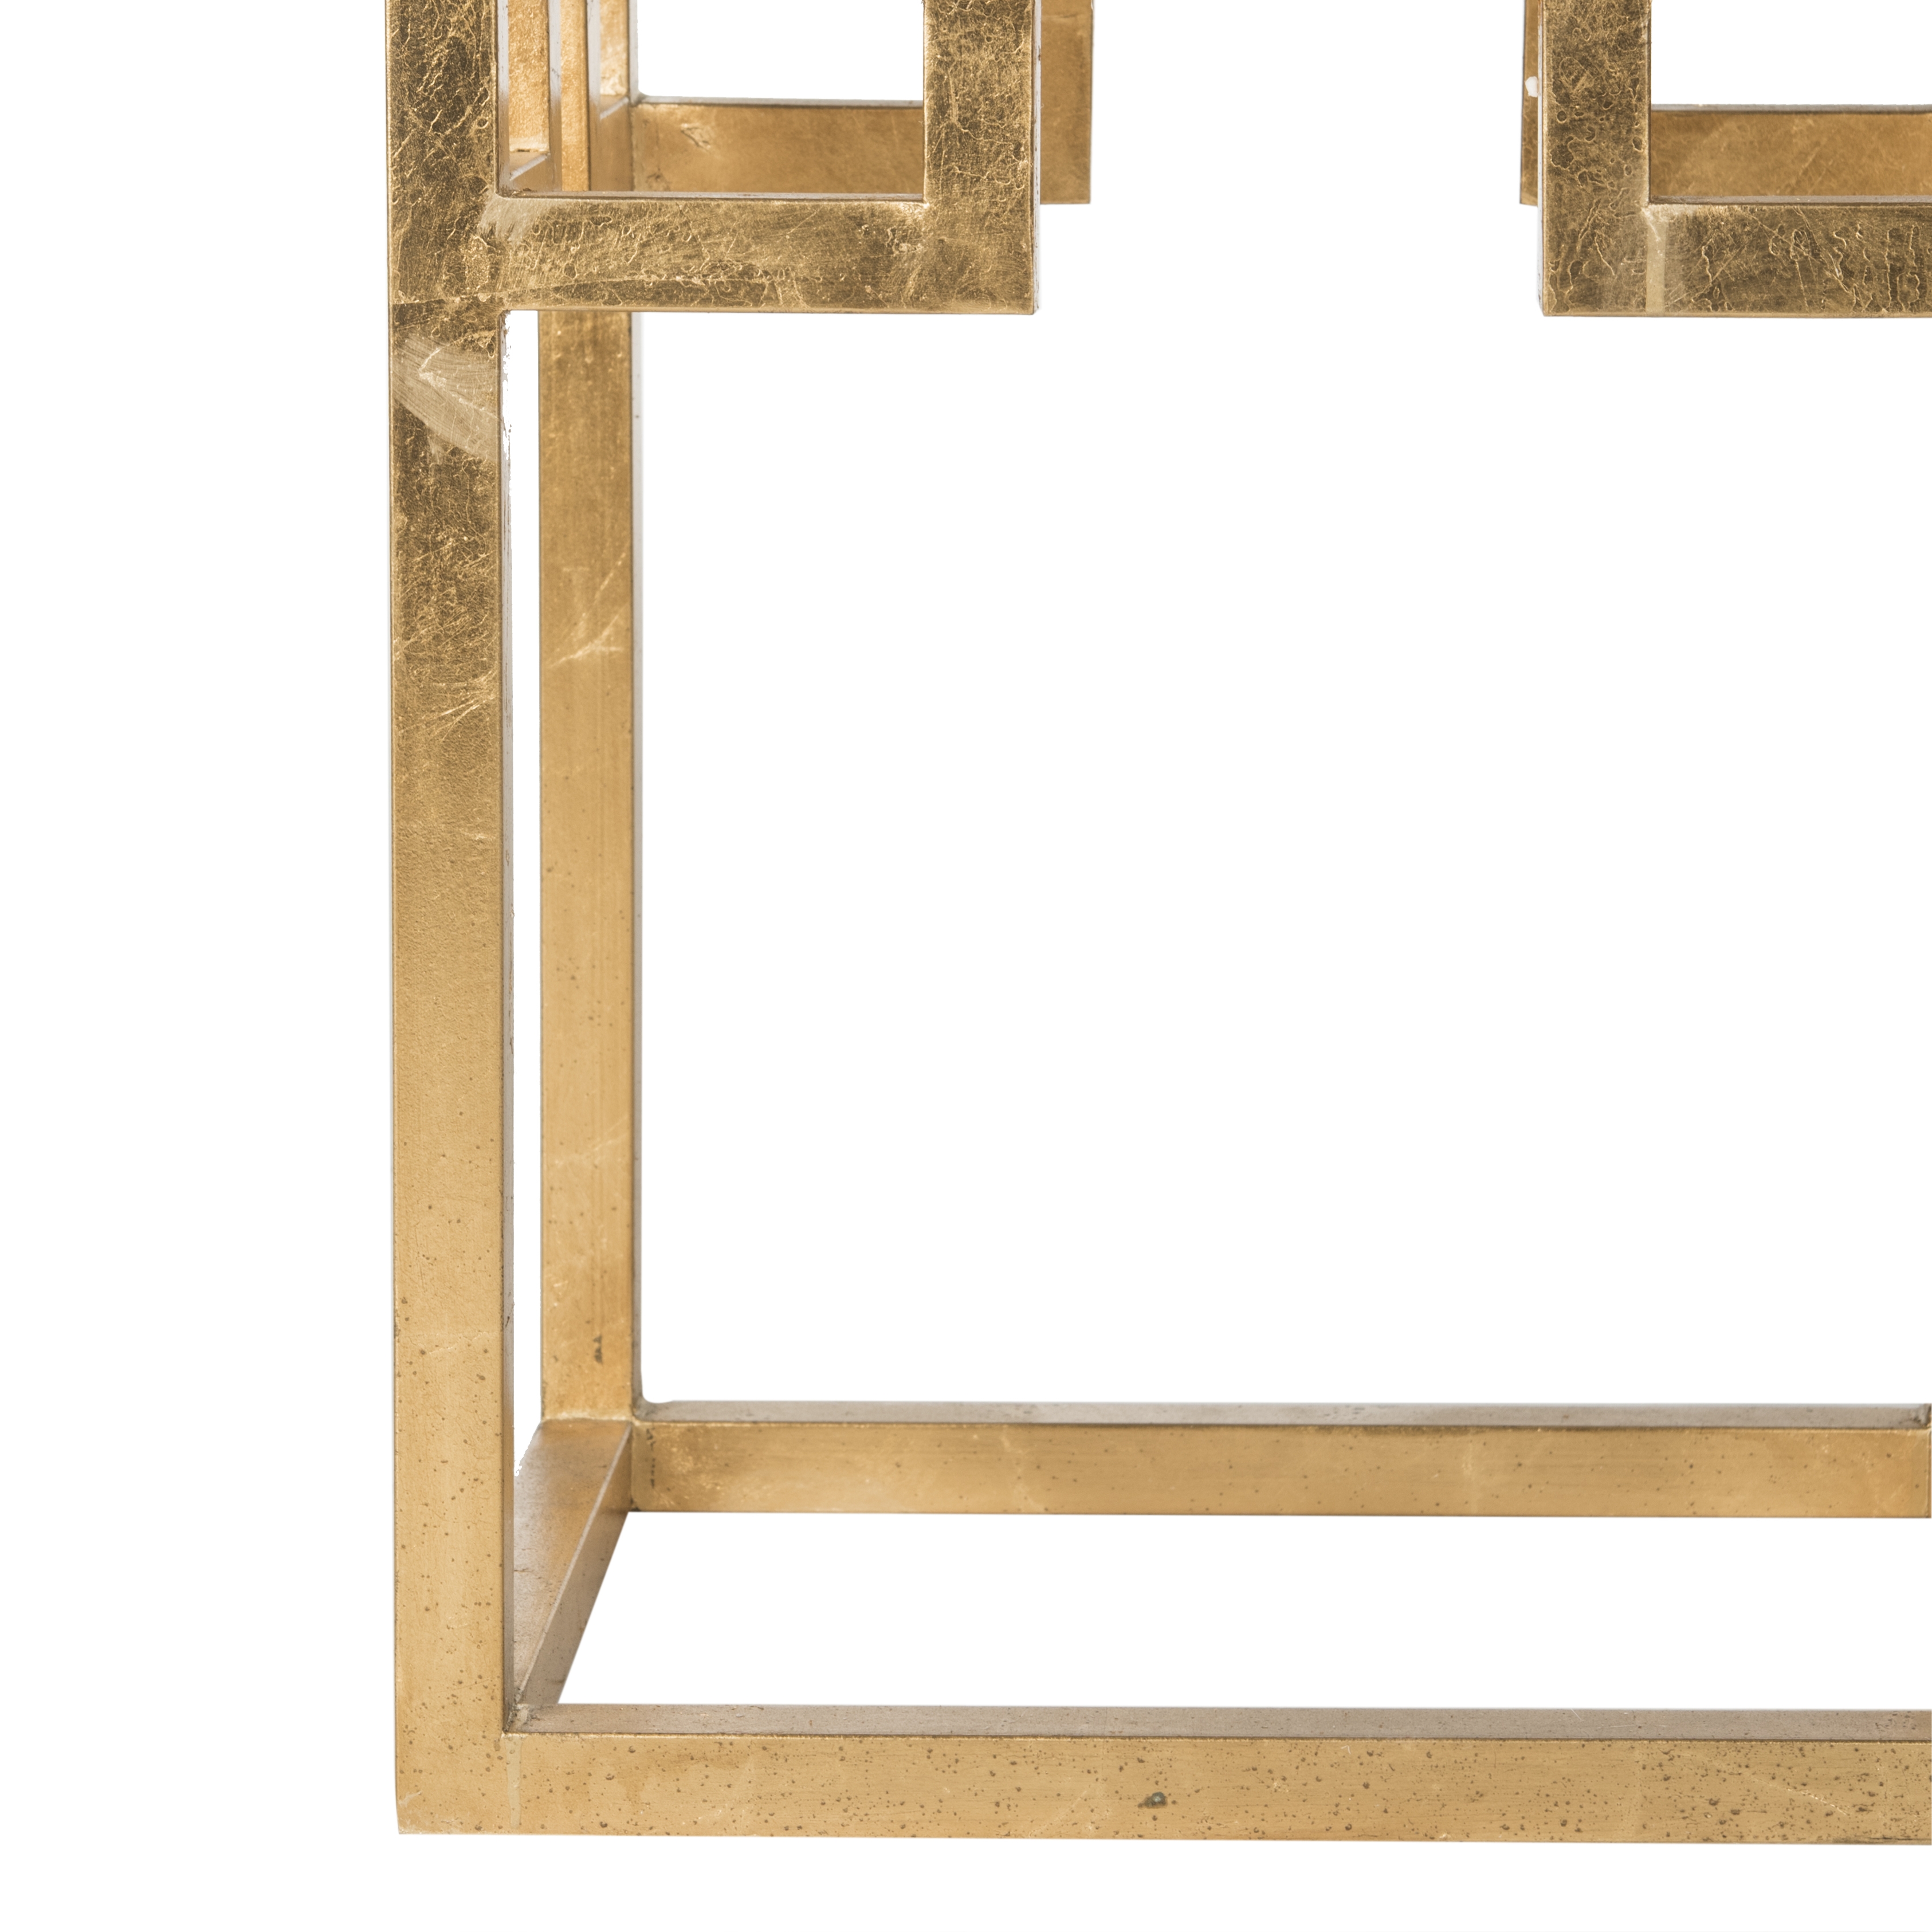 Byram Greek Key Glass Top End Table - Antique Gold - Safavieh - Image 0